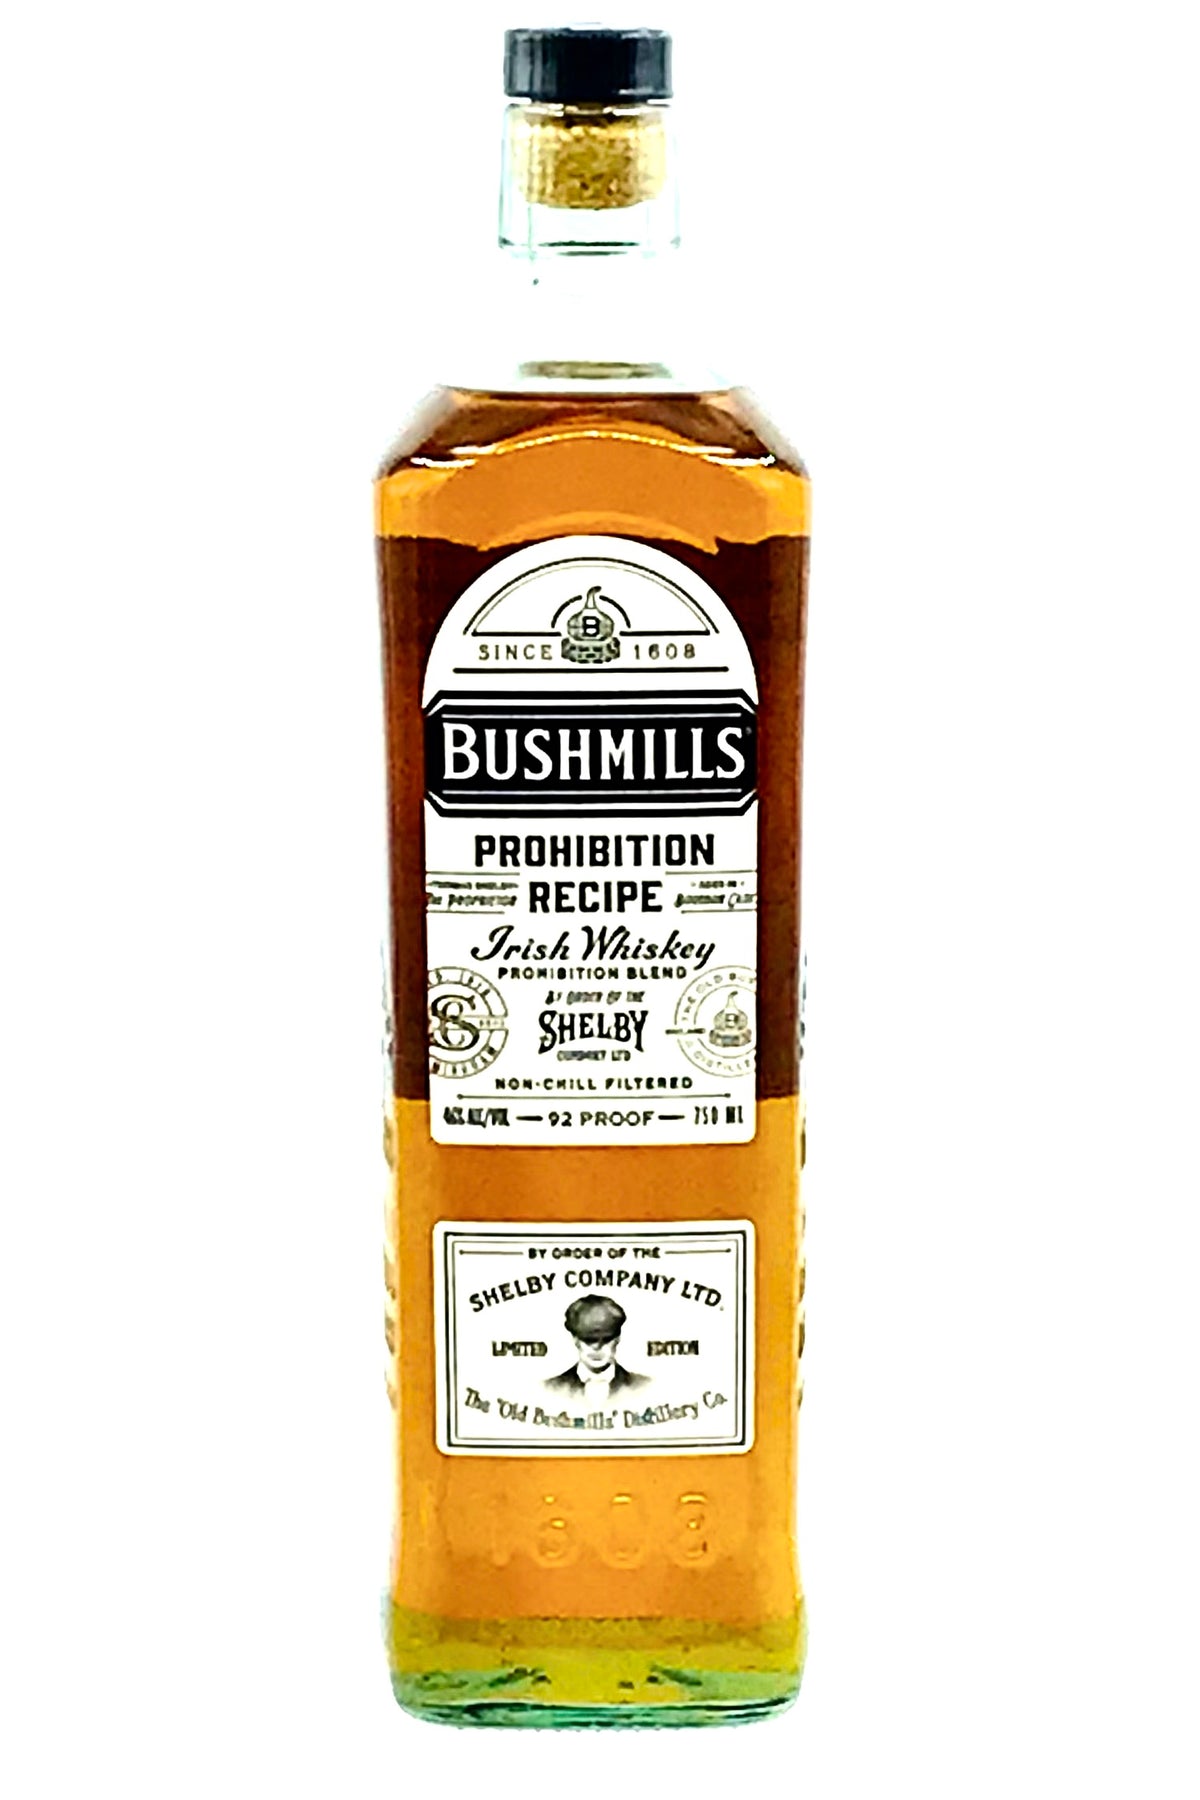 Bushmills Prohibition Recipe x Peaky Blinders Irish Whiskey